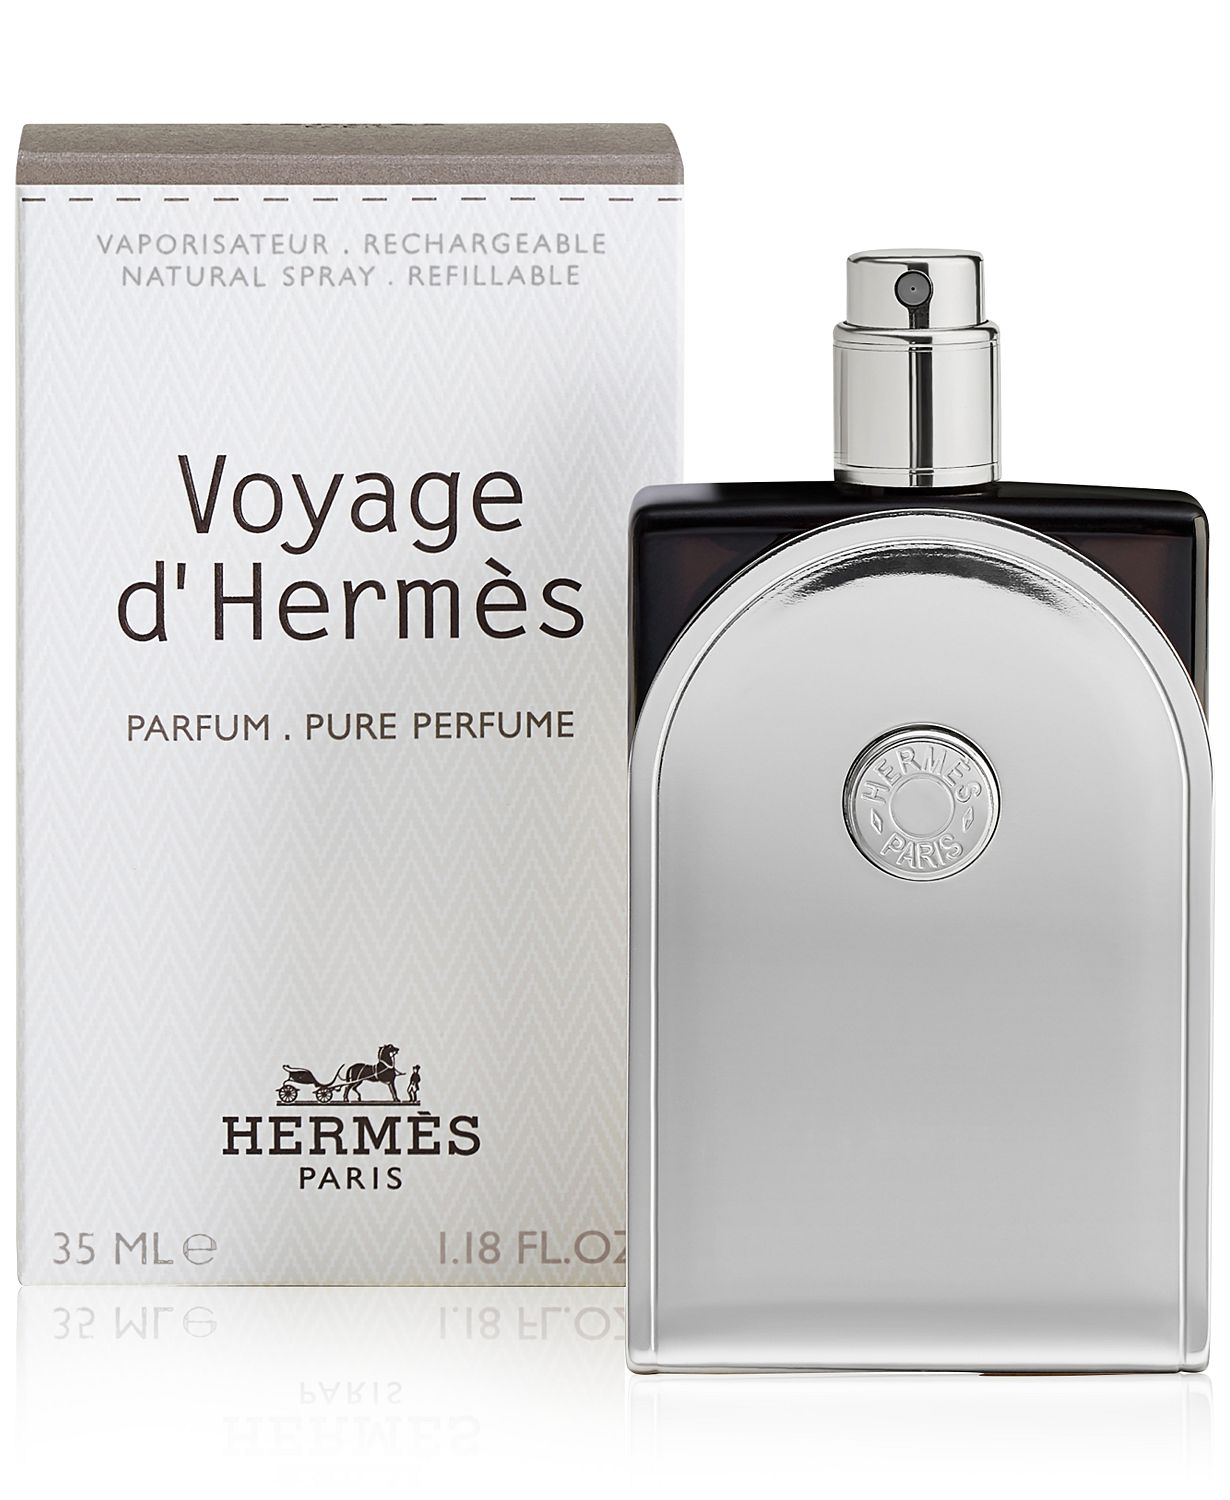 Voyage d'Hermès Pure Perfume, Parfum Refillable Spray, 1.18 oz.